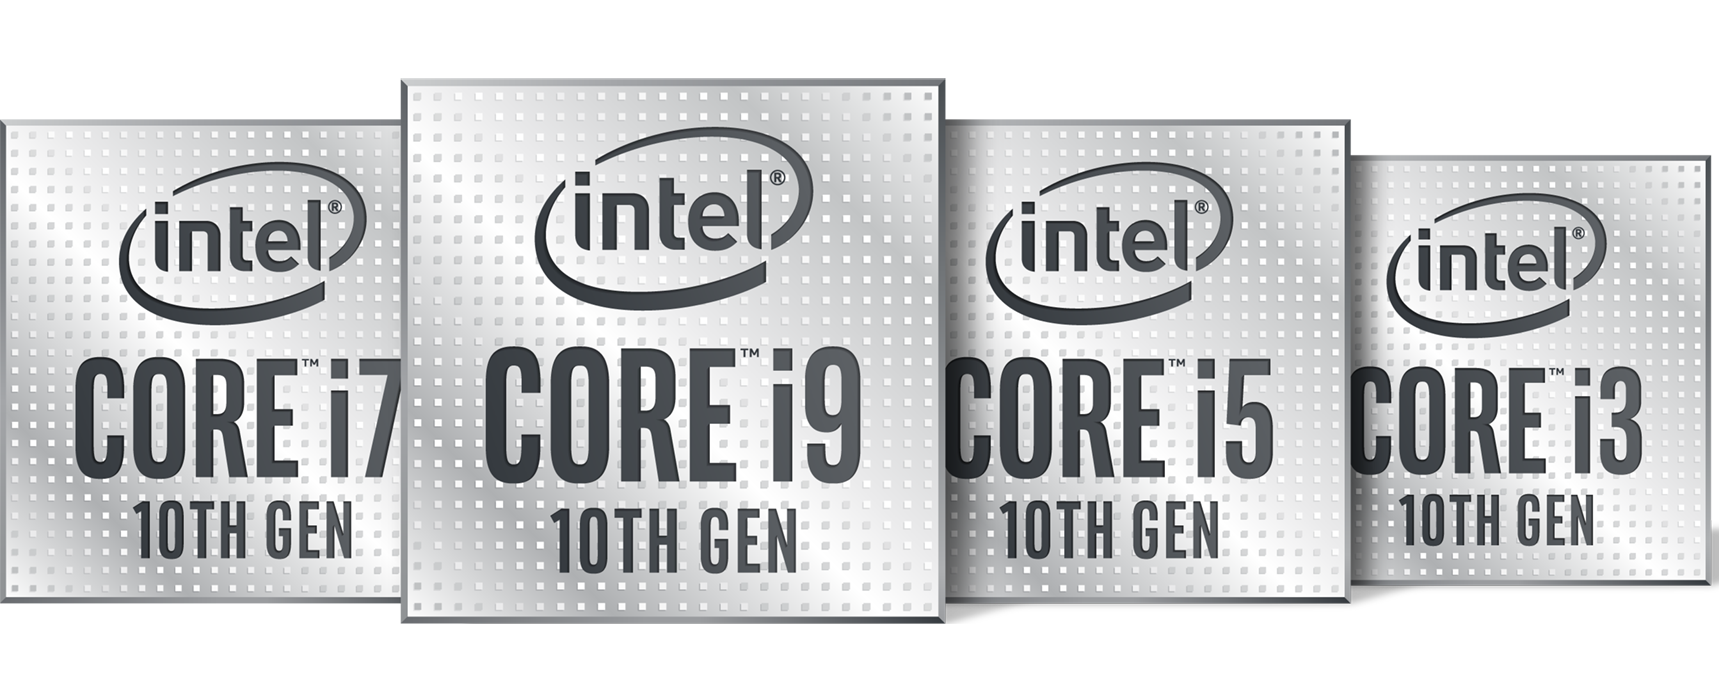 Image of the Intel 10th Gen CPU logos